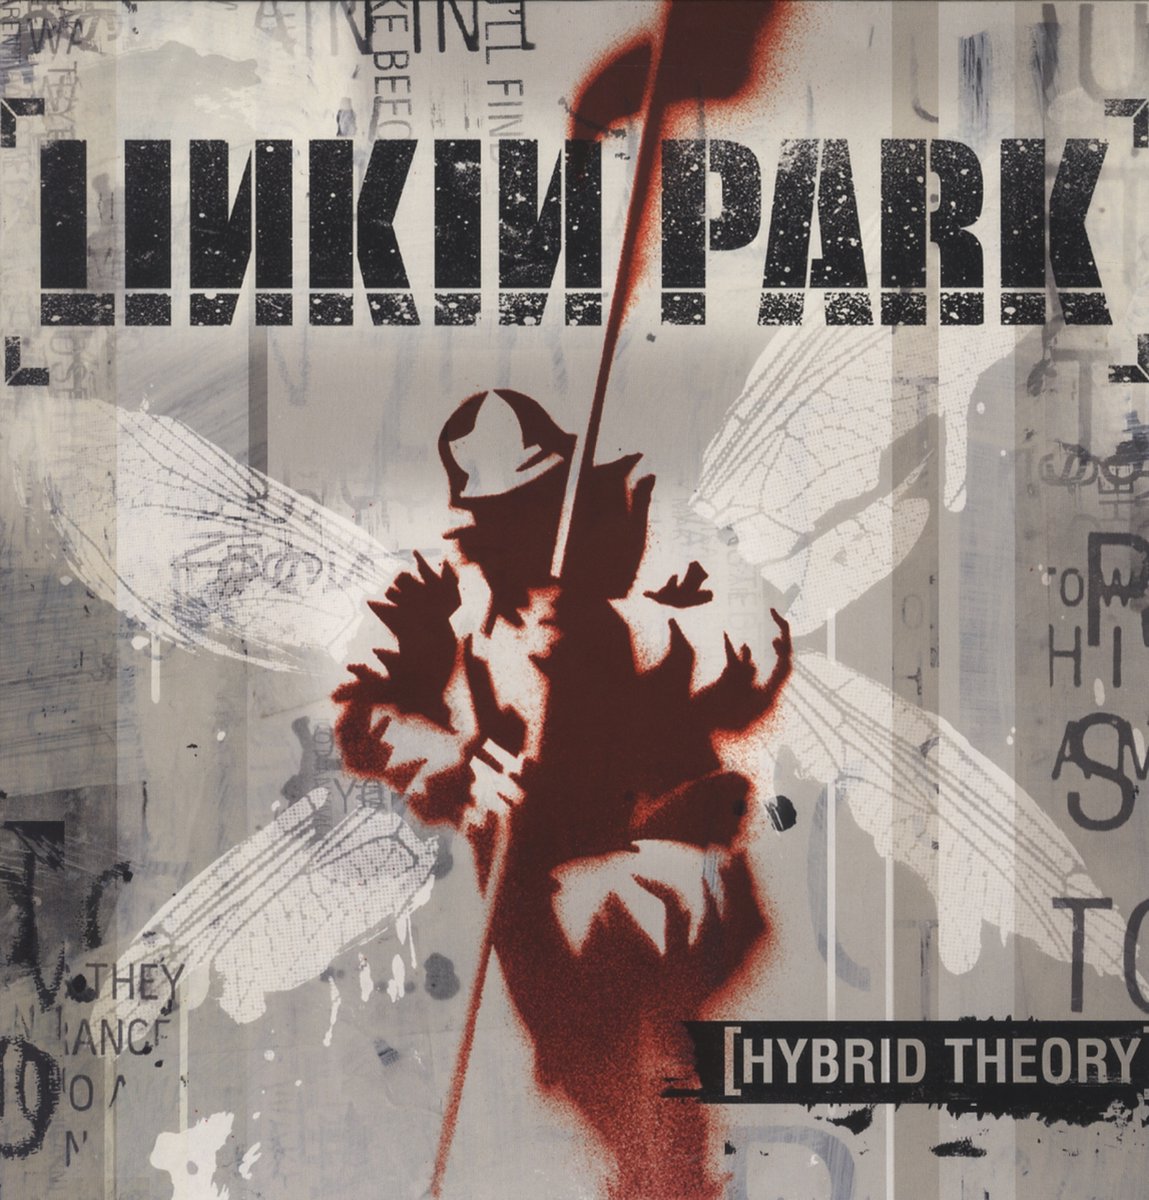 Hybrid Theory (LP) - Linkin Park